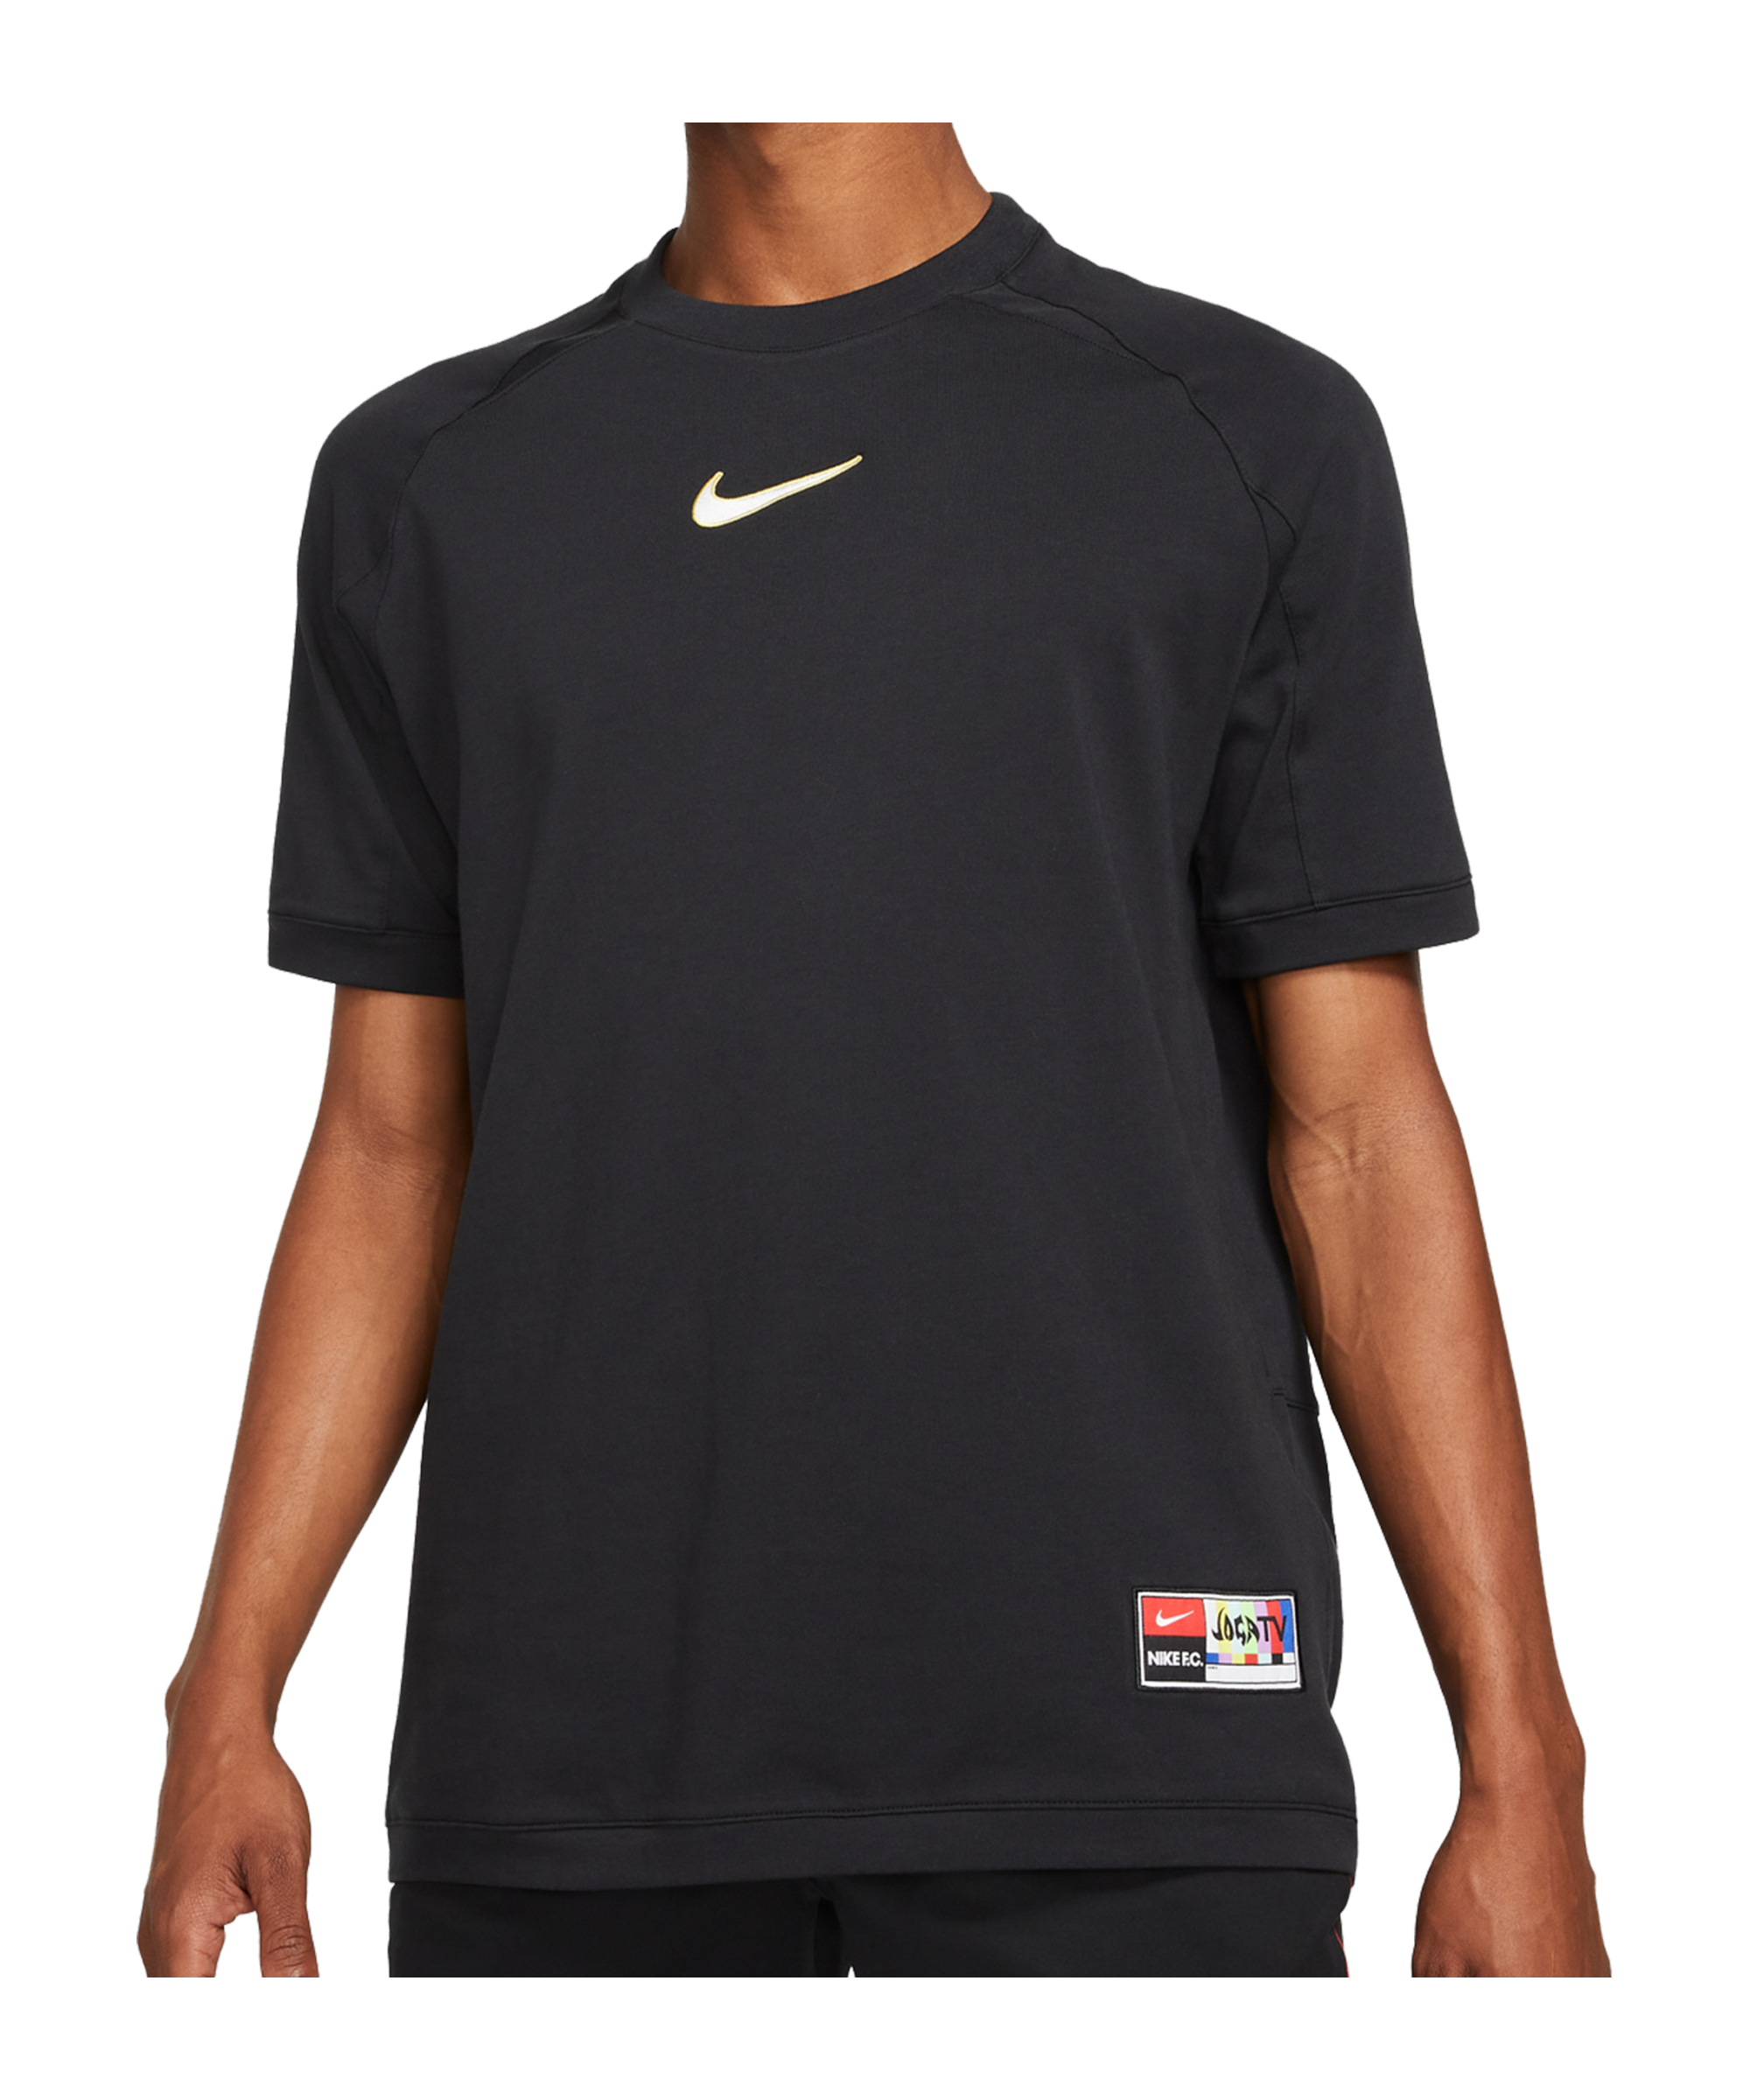 Achternaam Oost Op risico Nike F.C. Joga Bonito T-Shirt - Black